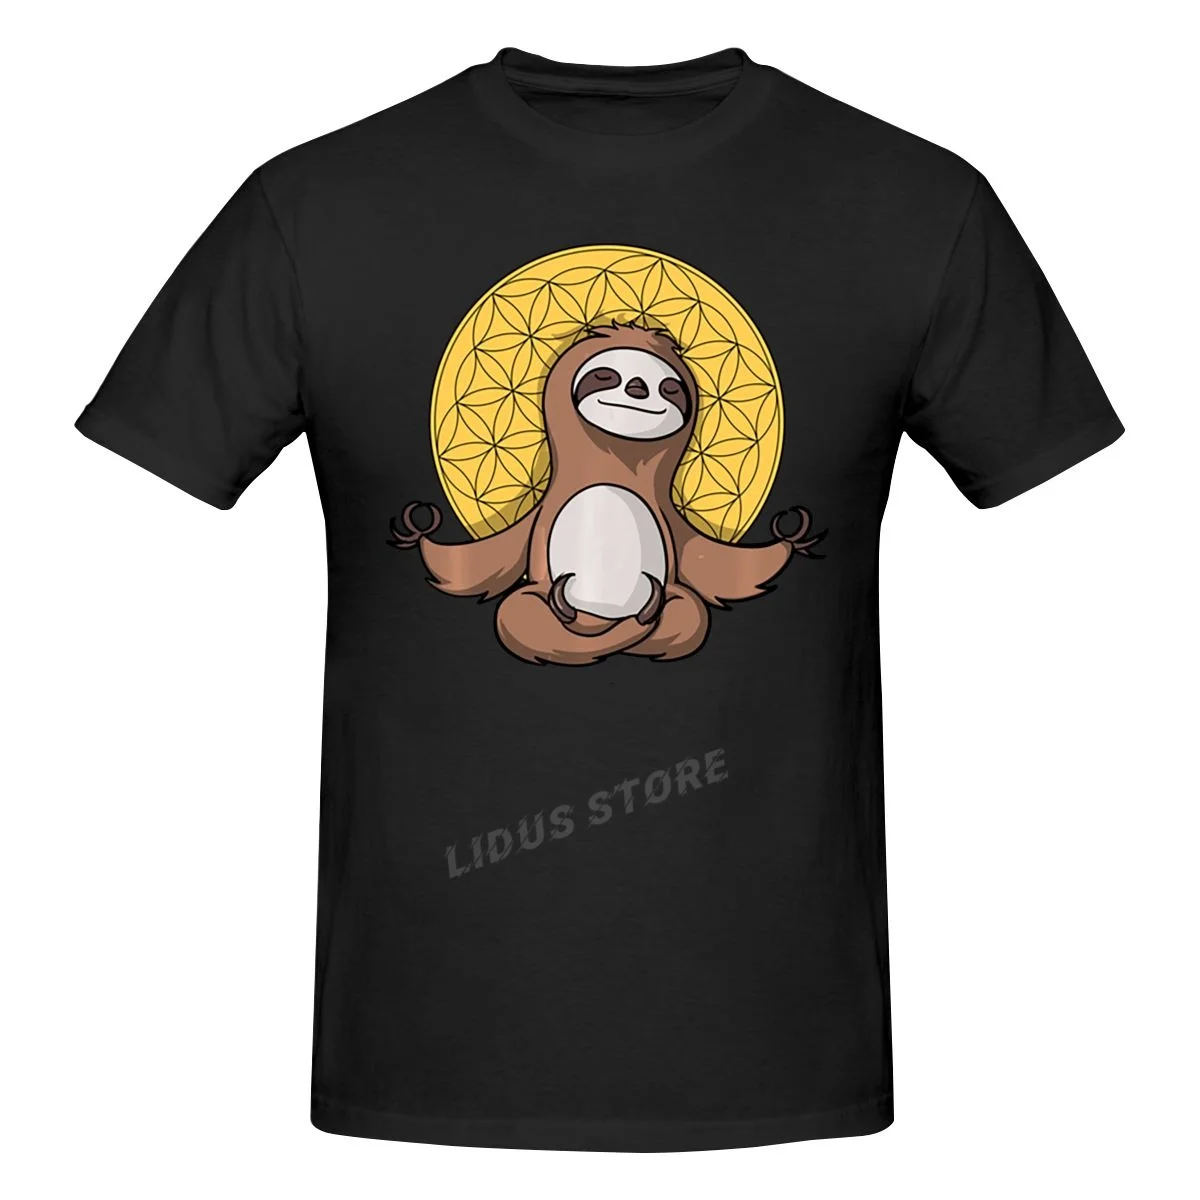 

Funny Sloth Yoga Meditation Zen Flower Of Life Spirit Animal T shirt Harajuku Clothing Short Sleeve Cotton Graphic Tshirt Tees